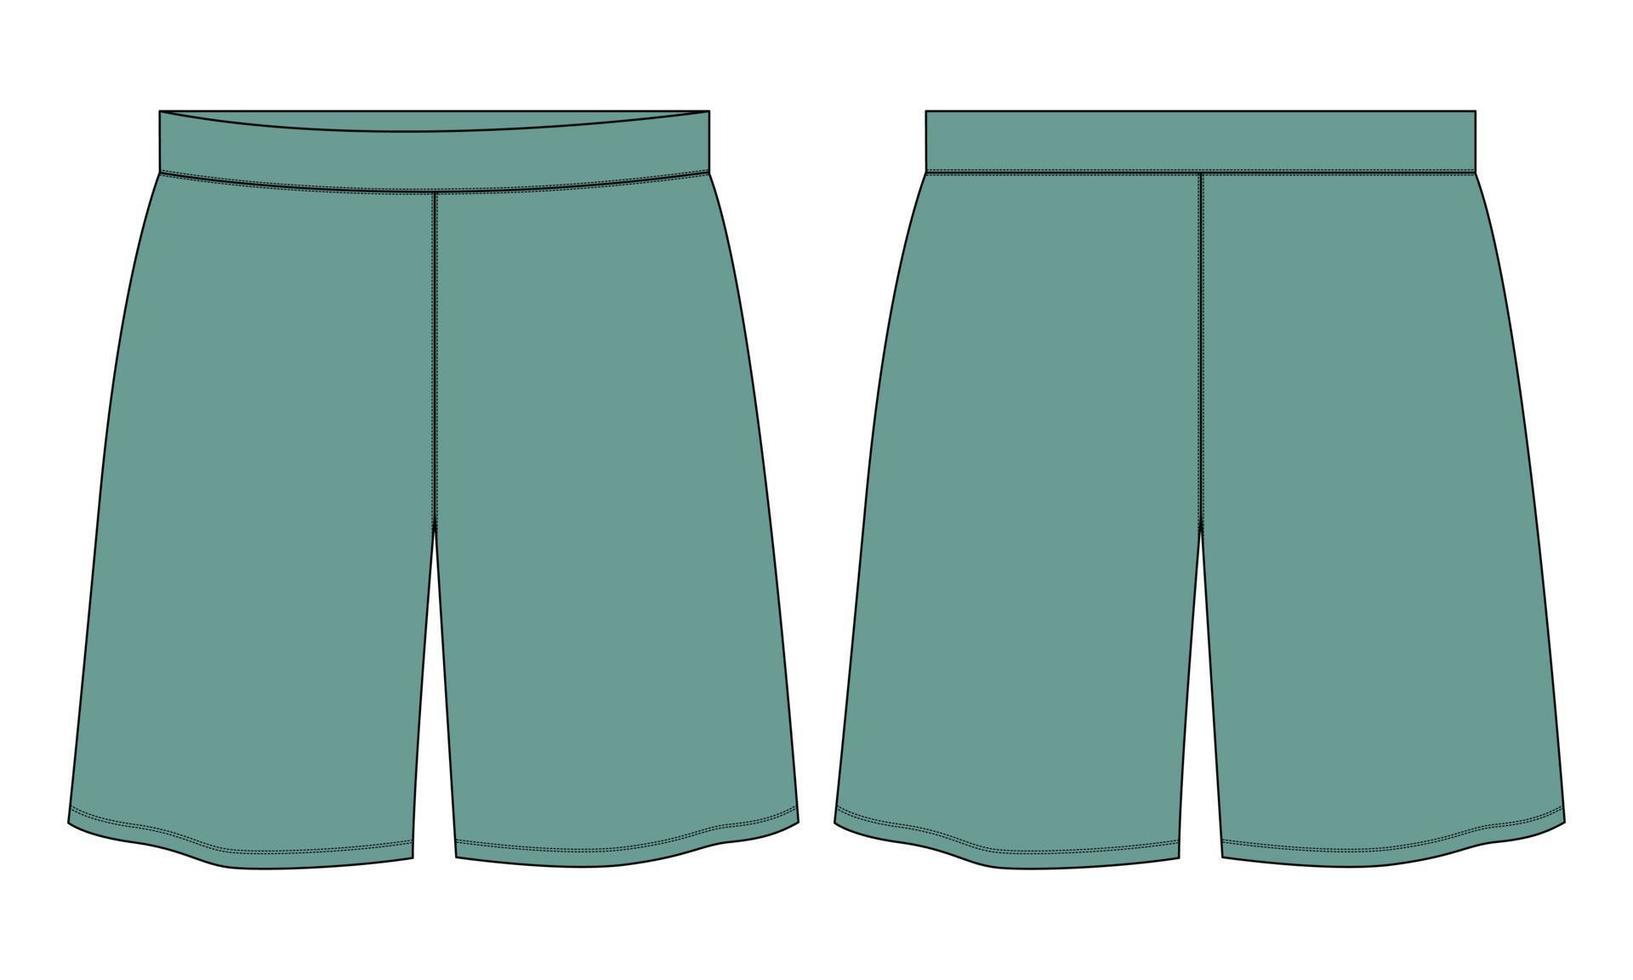 zweet Jersey shorts hijgen vector mode vlak schetsen sjabloon.